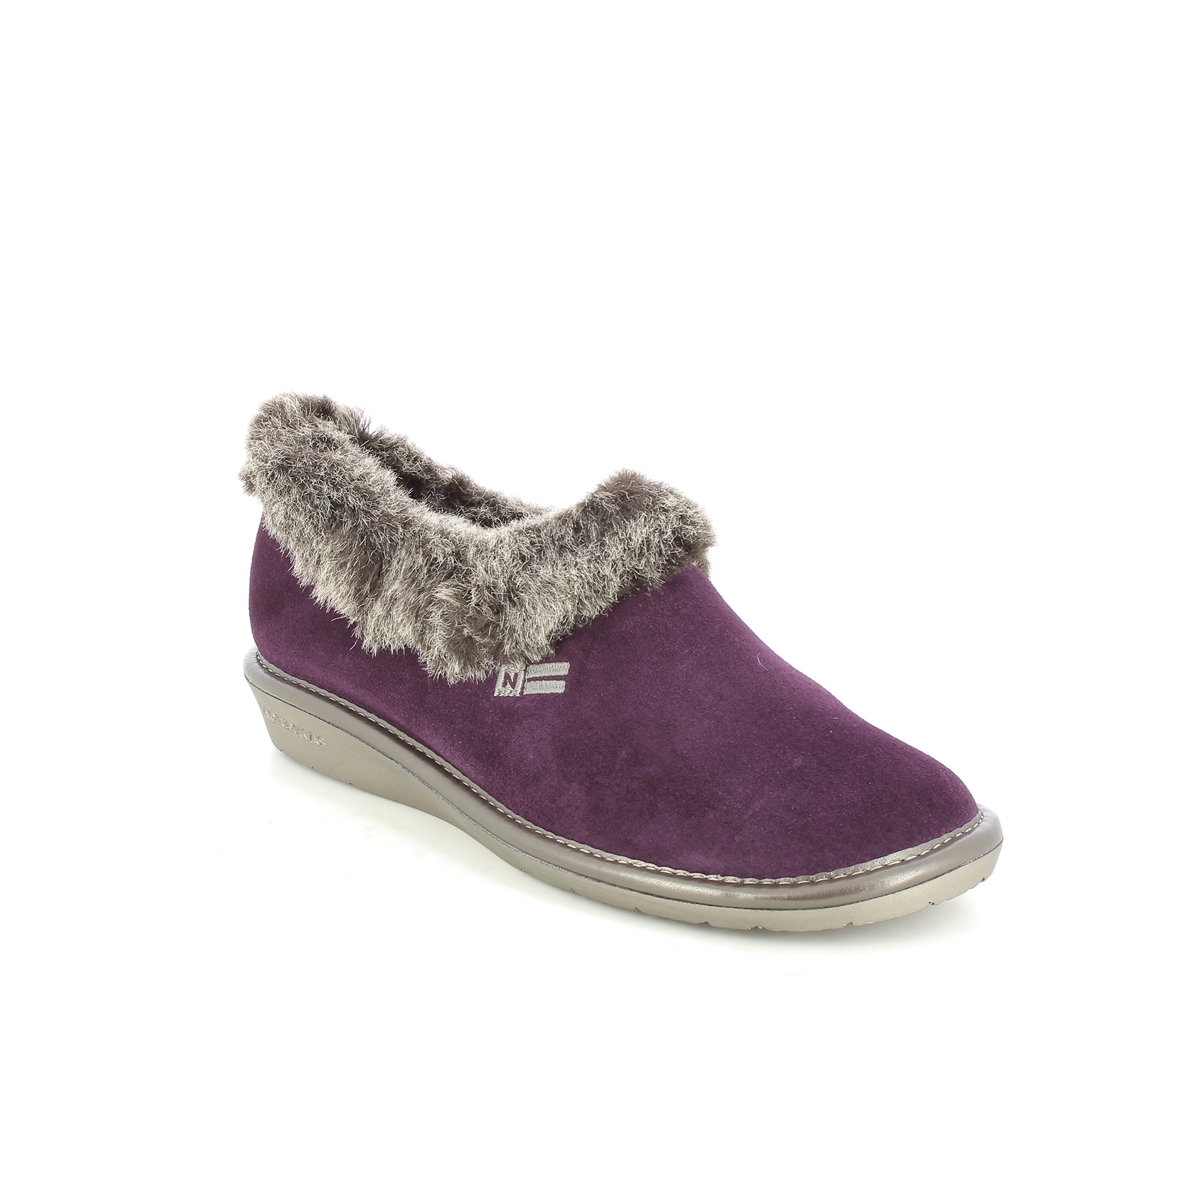 Nordikas Toasty Fur Purple Suede Womens Slippers 1358-95 In Size 39 In Plain Purple Suede